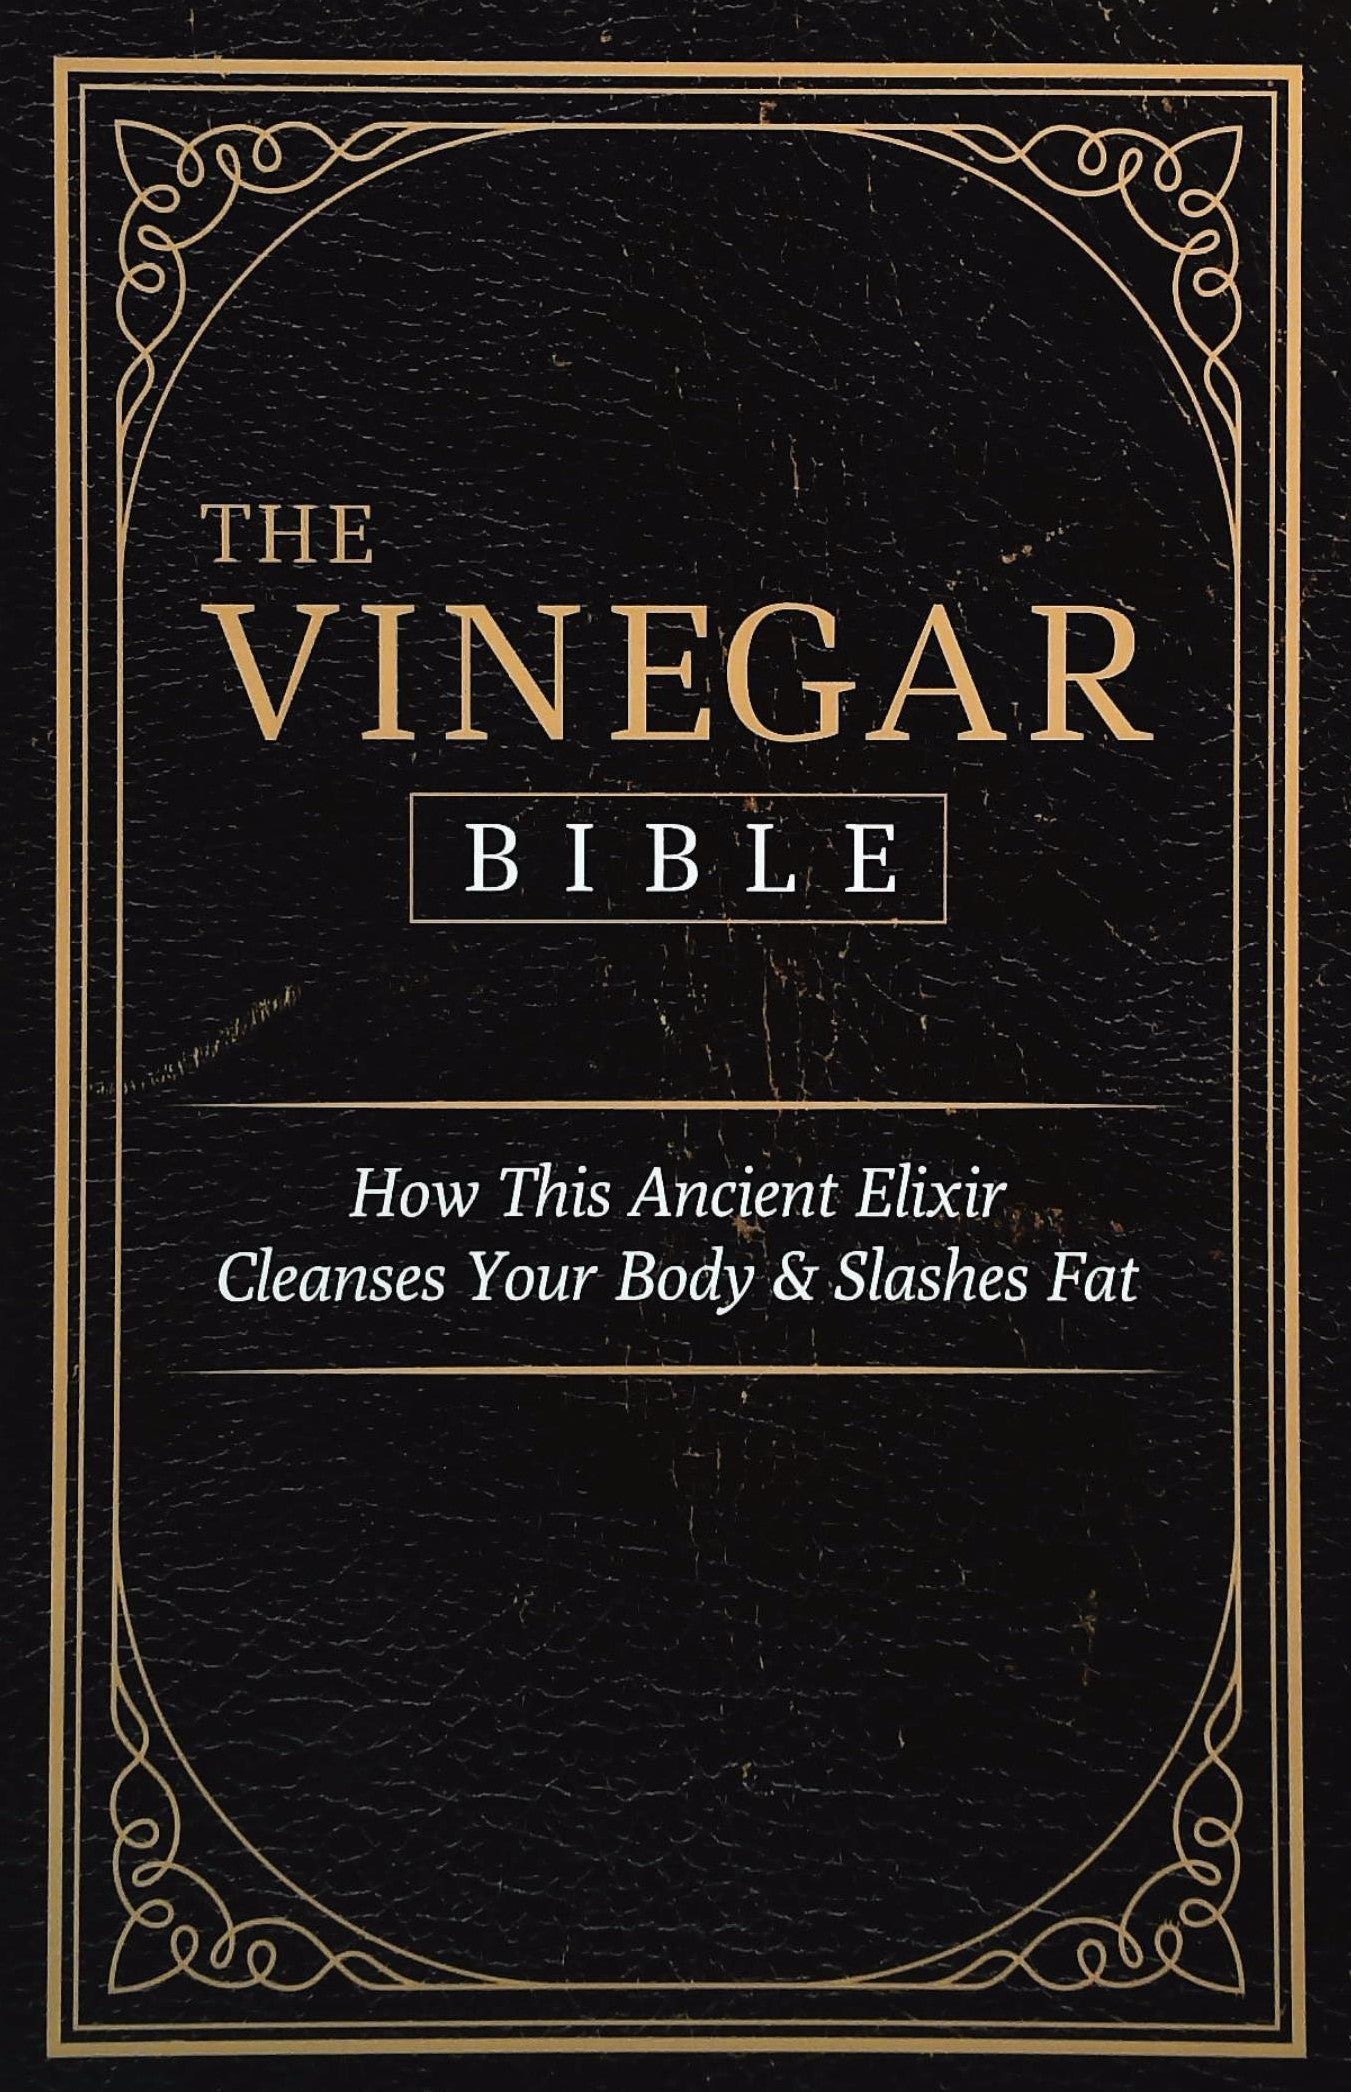 Livre ISBN 1944462163 The Vinegar Bible : How This Ancient Elixir Cleanses Your Body & Slashe Fat